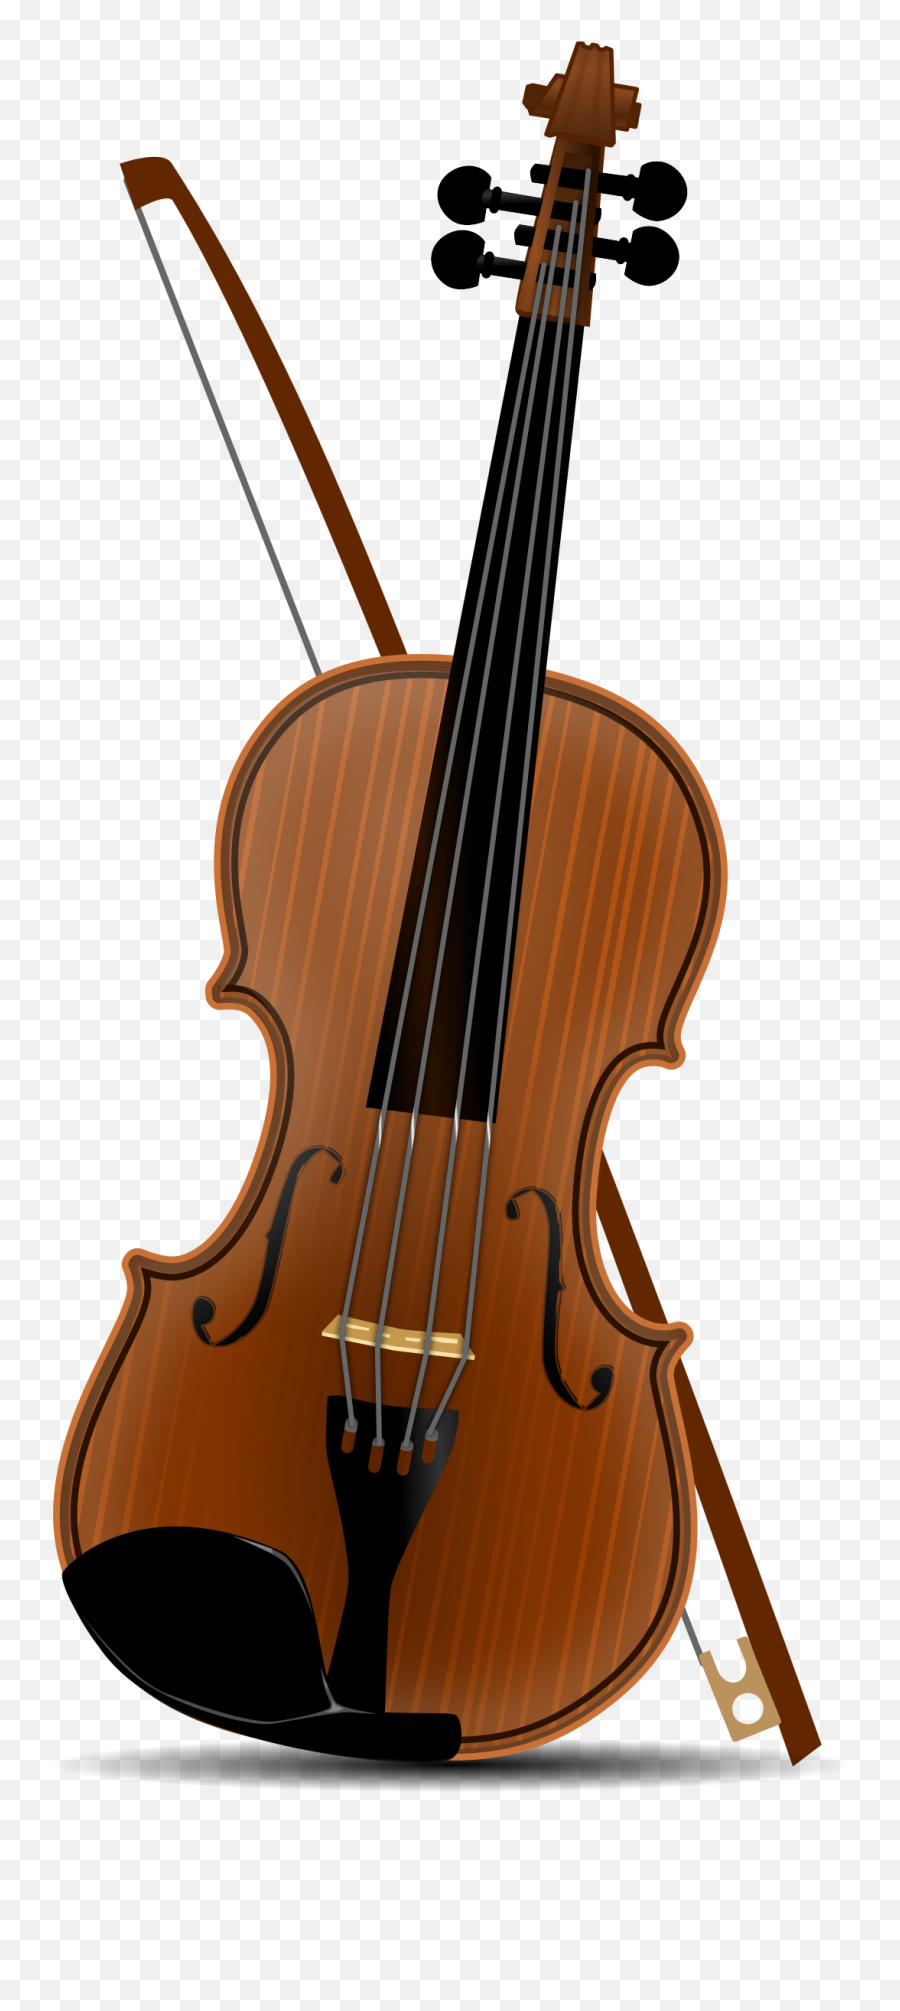 Cartoon Violin And Bow Clip Art Image - Clipsafari Transparent Background Violin Clipart Emoji,X And Bow Emoji